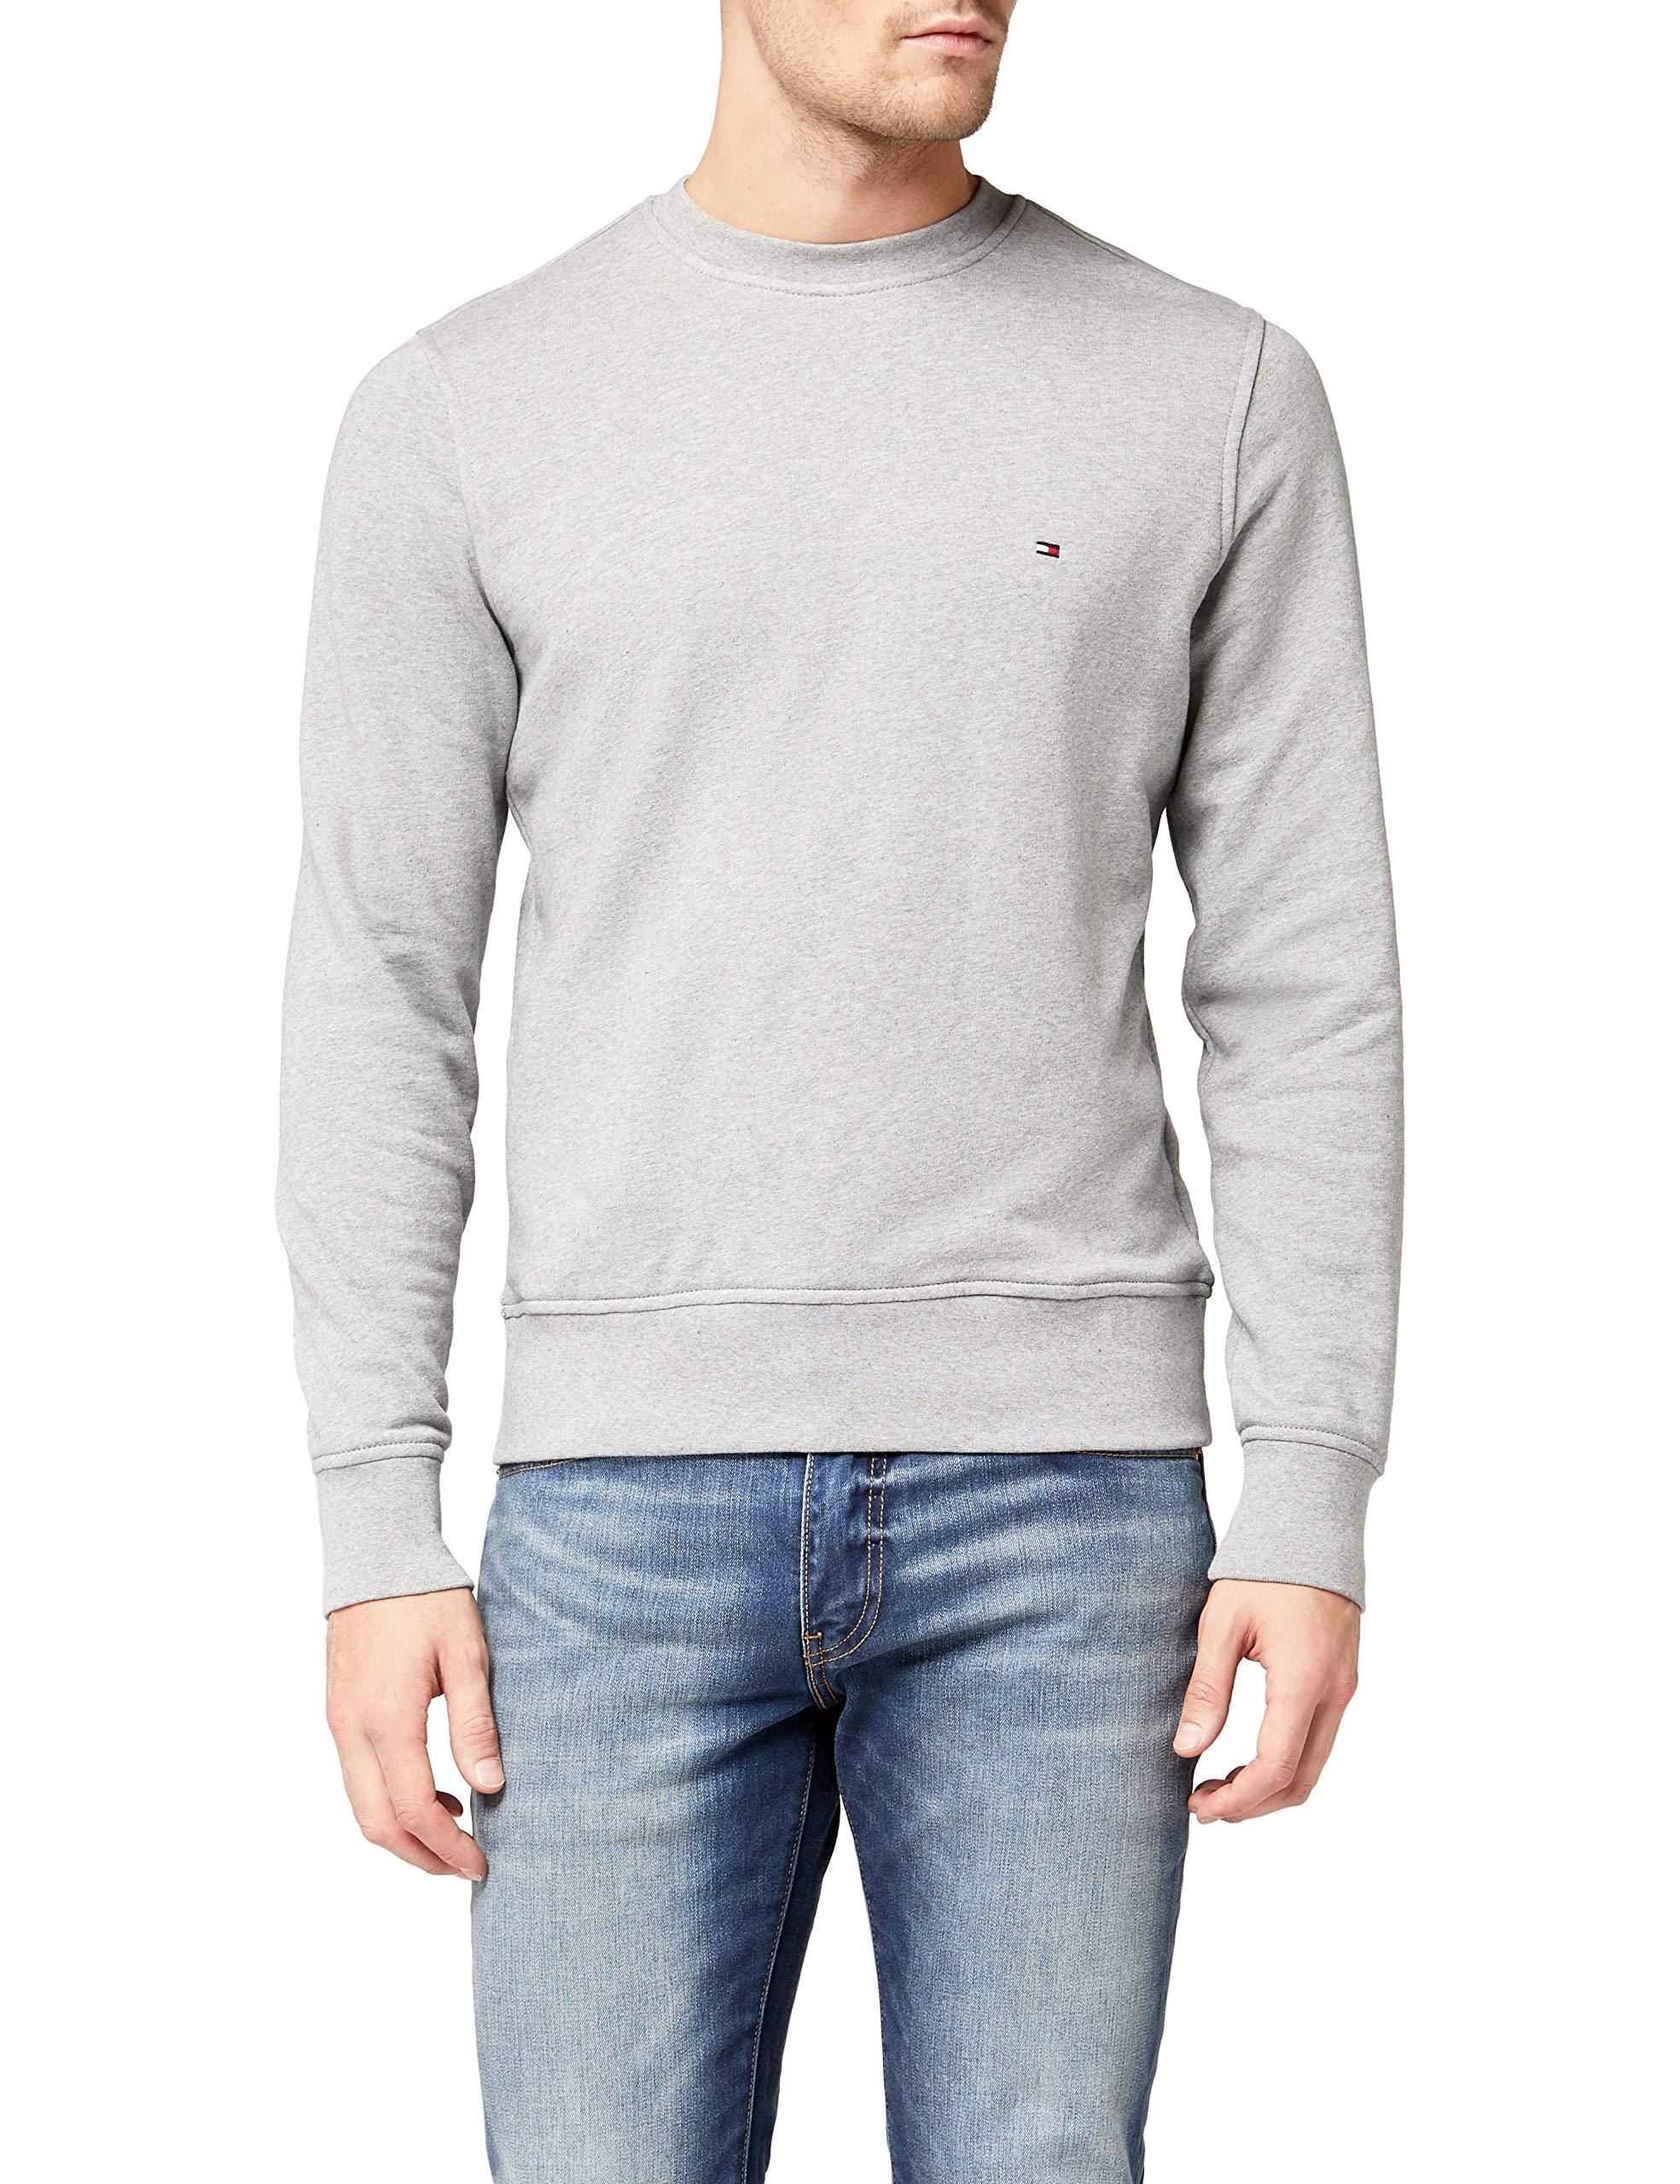 Tommy Hilfiger Core Cotton Sweatshirt Jumper in Grey for Men - Lyst